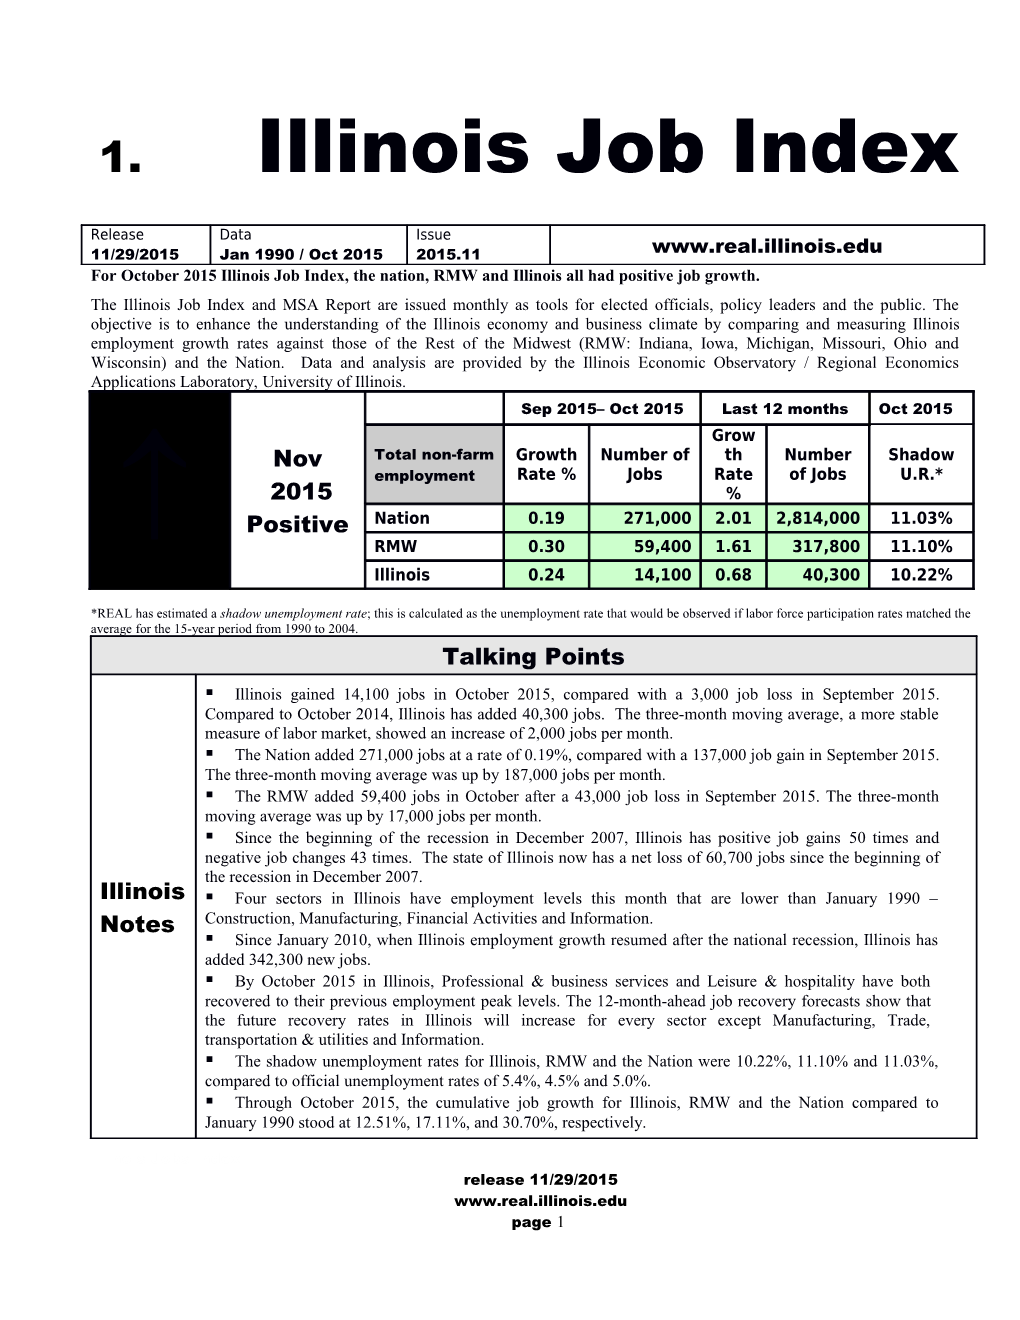 Foroctober2015illinois Job Index, the Nation,Rmwand Illinois All Had Positive Job Growth